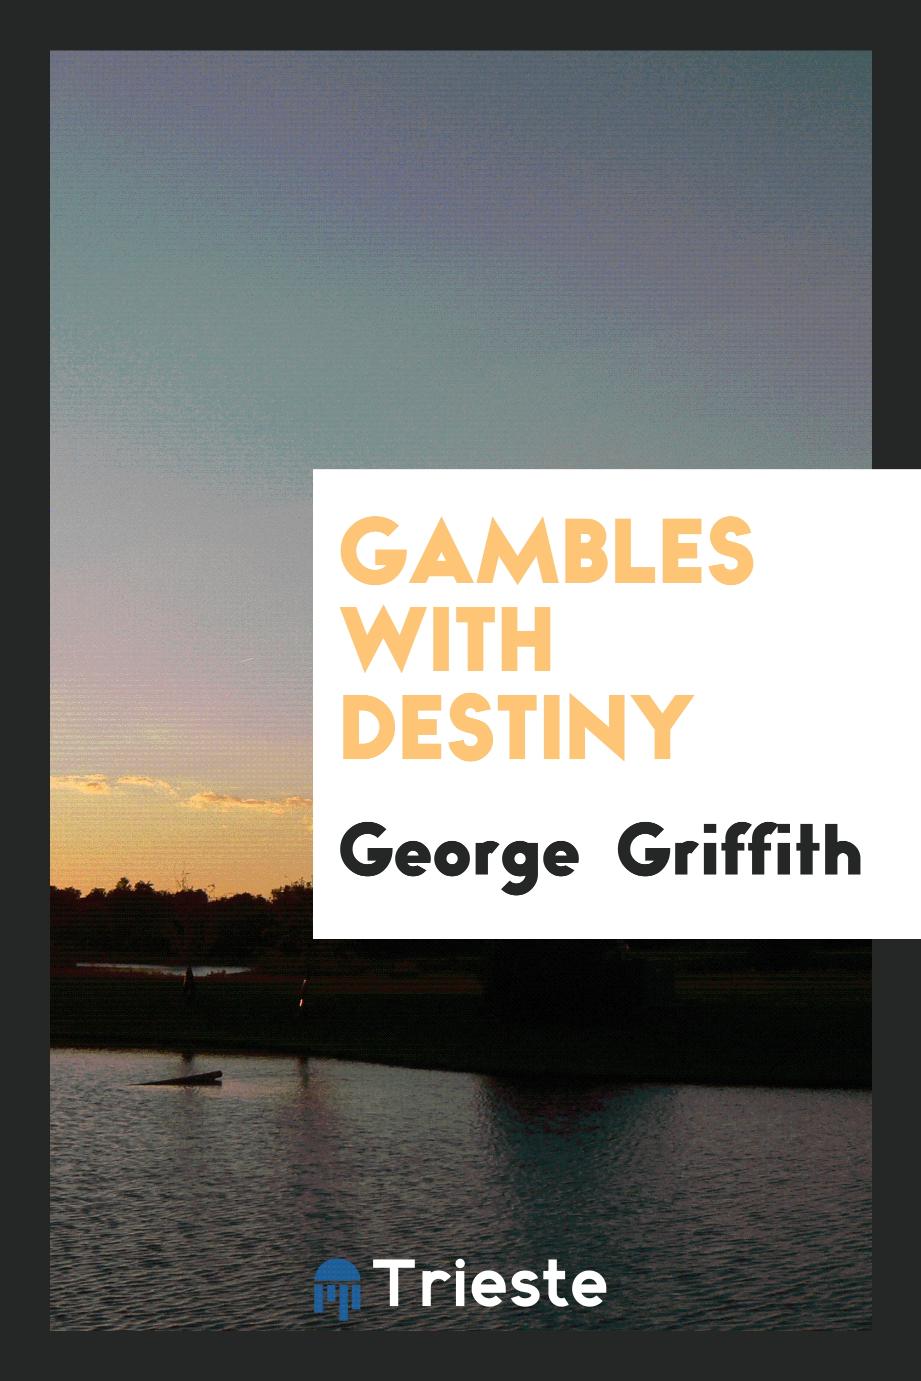 Gambles with destiny